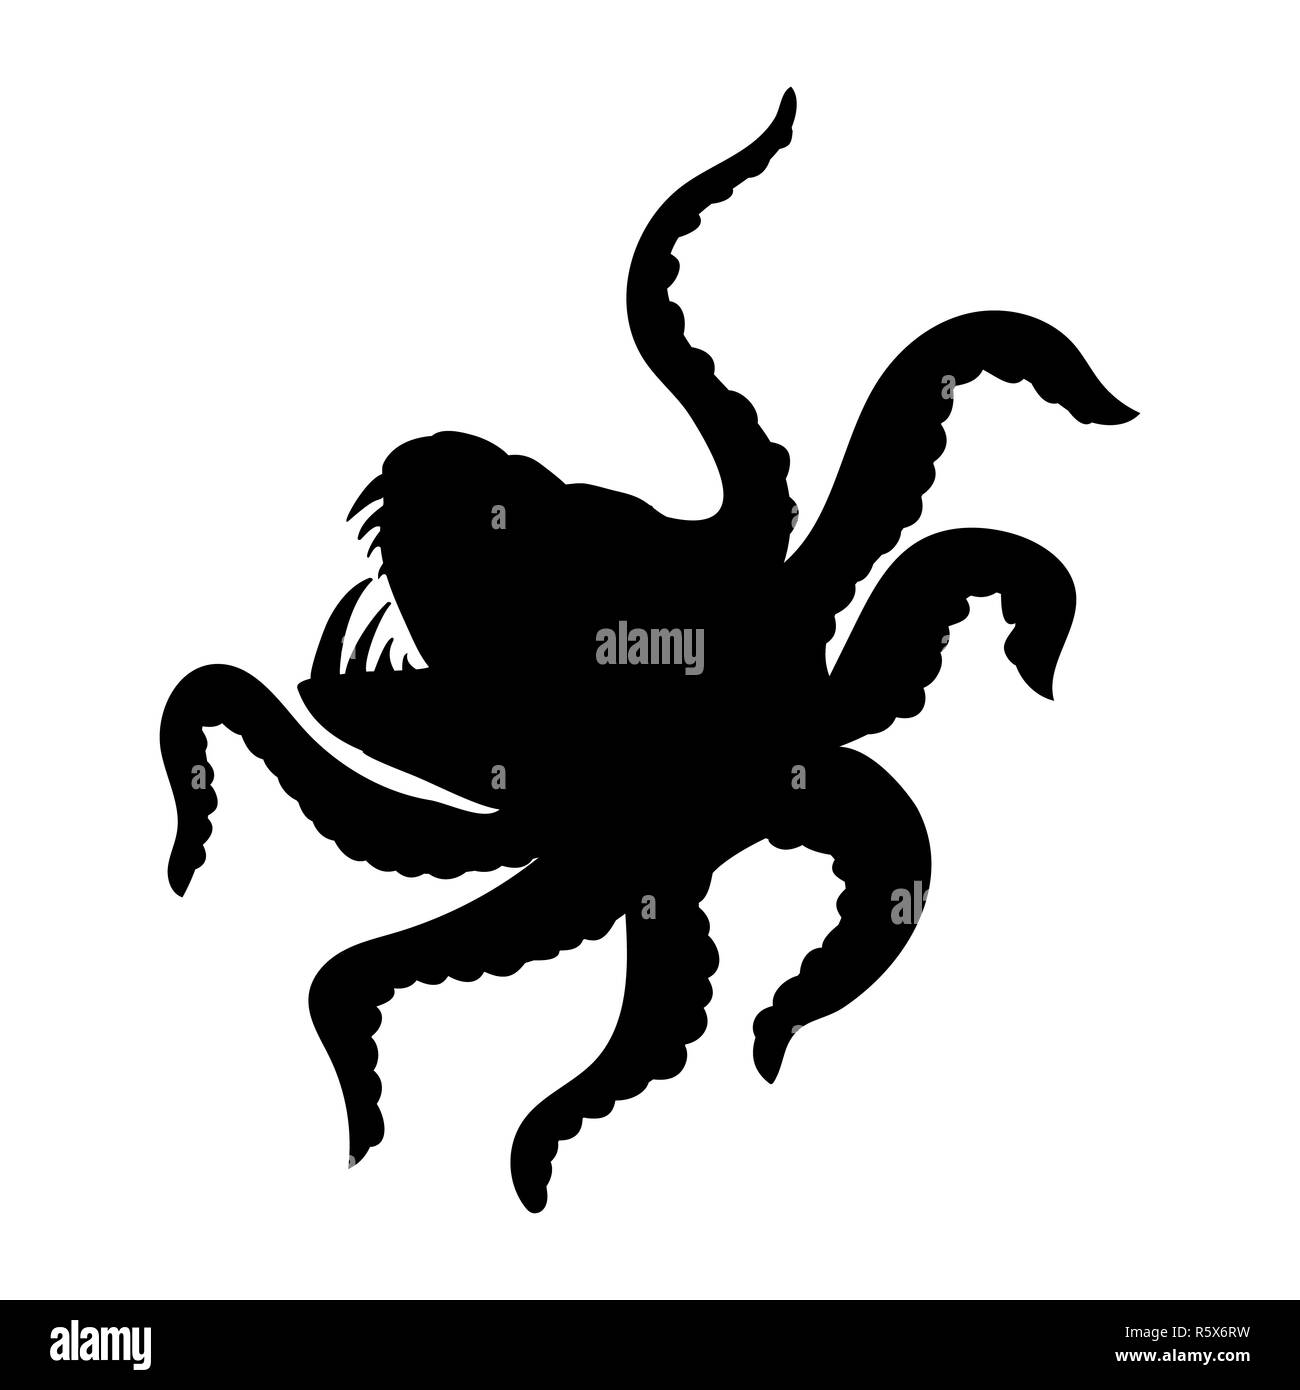 Kraken giant octopus silhouette ancient mythology fantasy Stock Photo